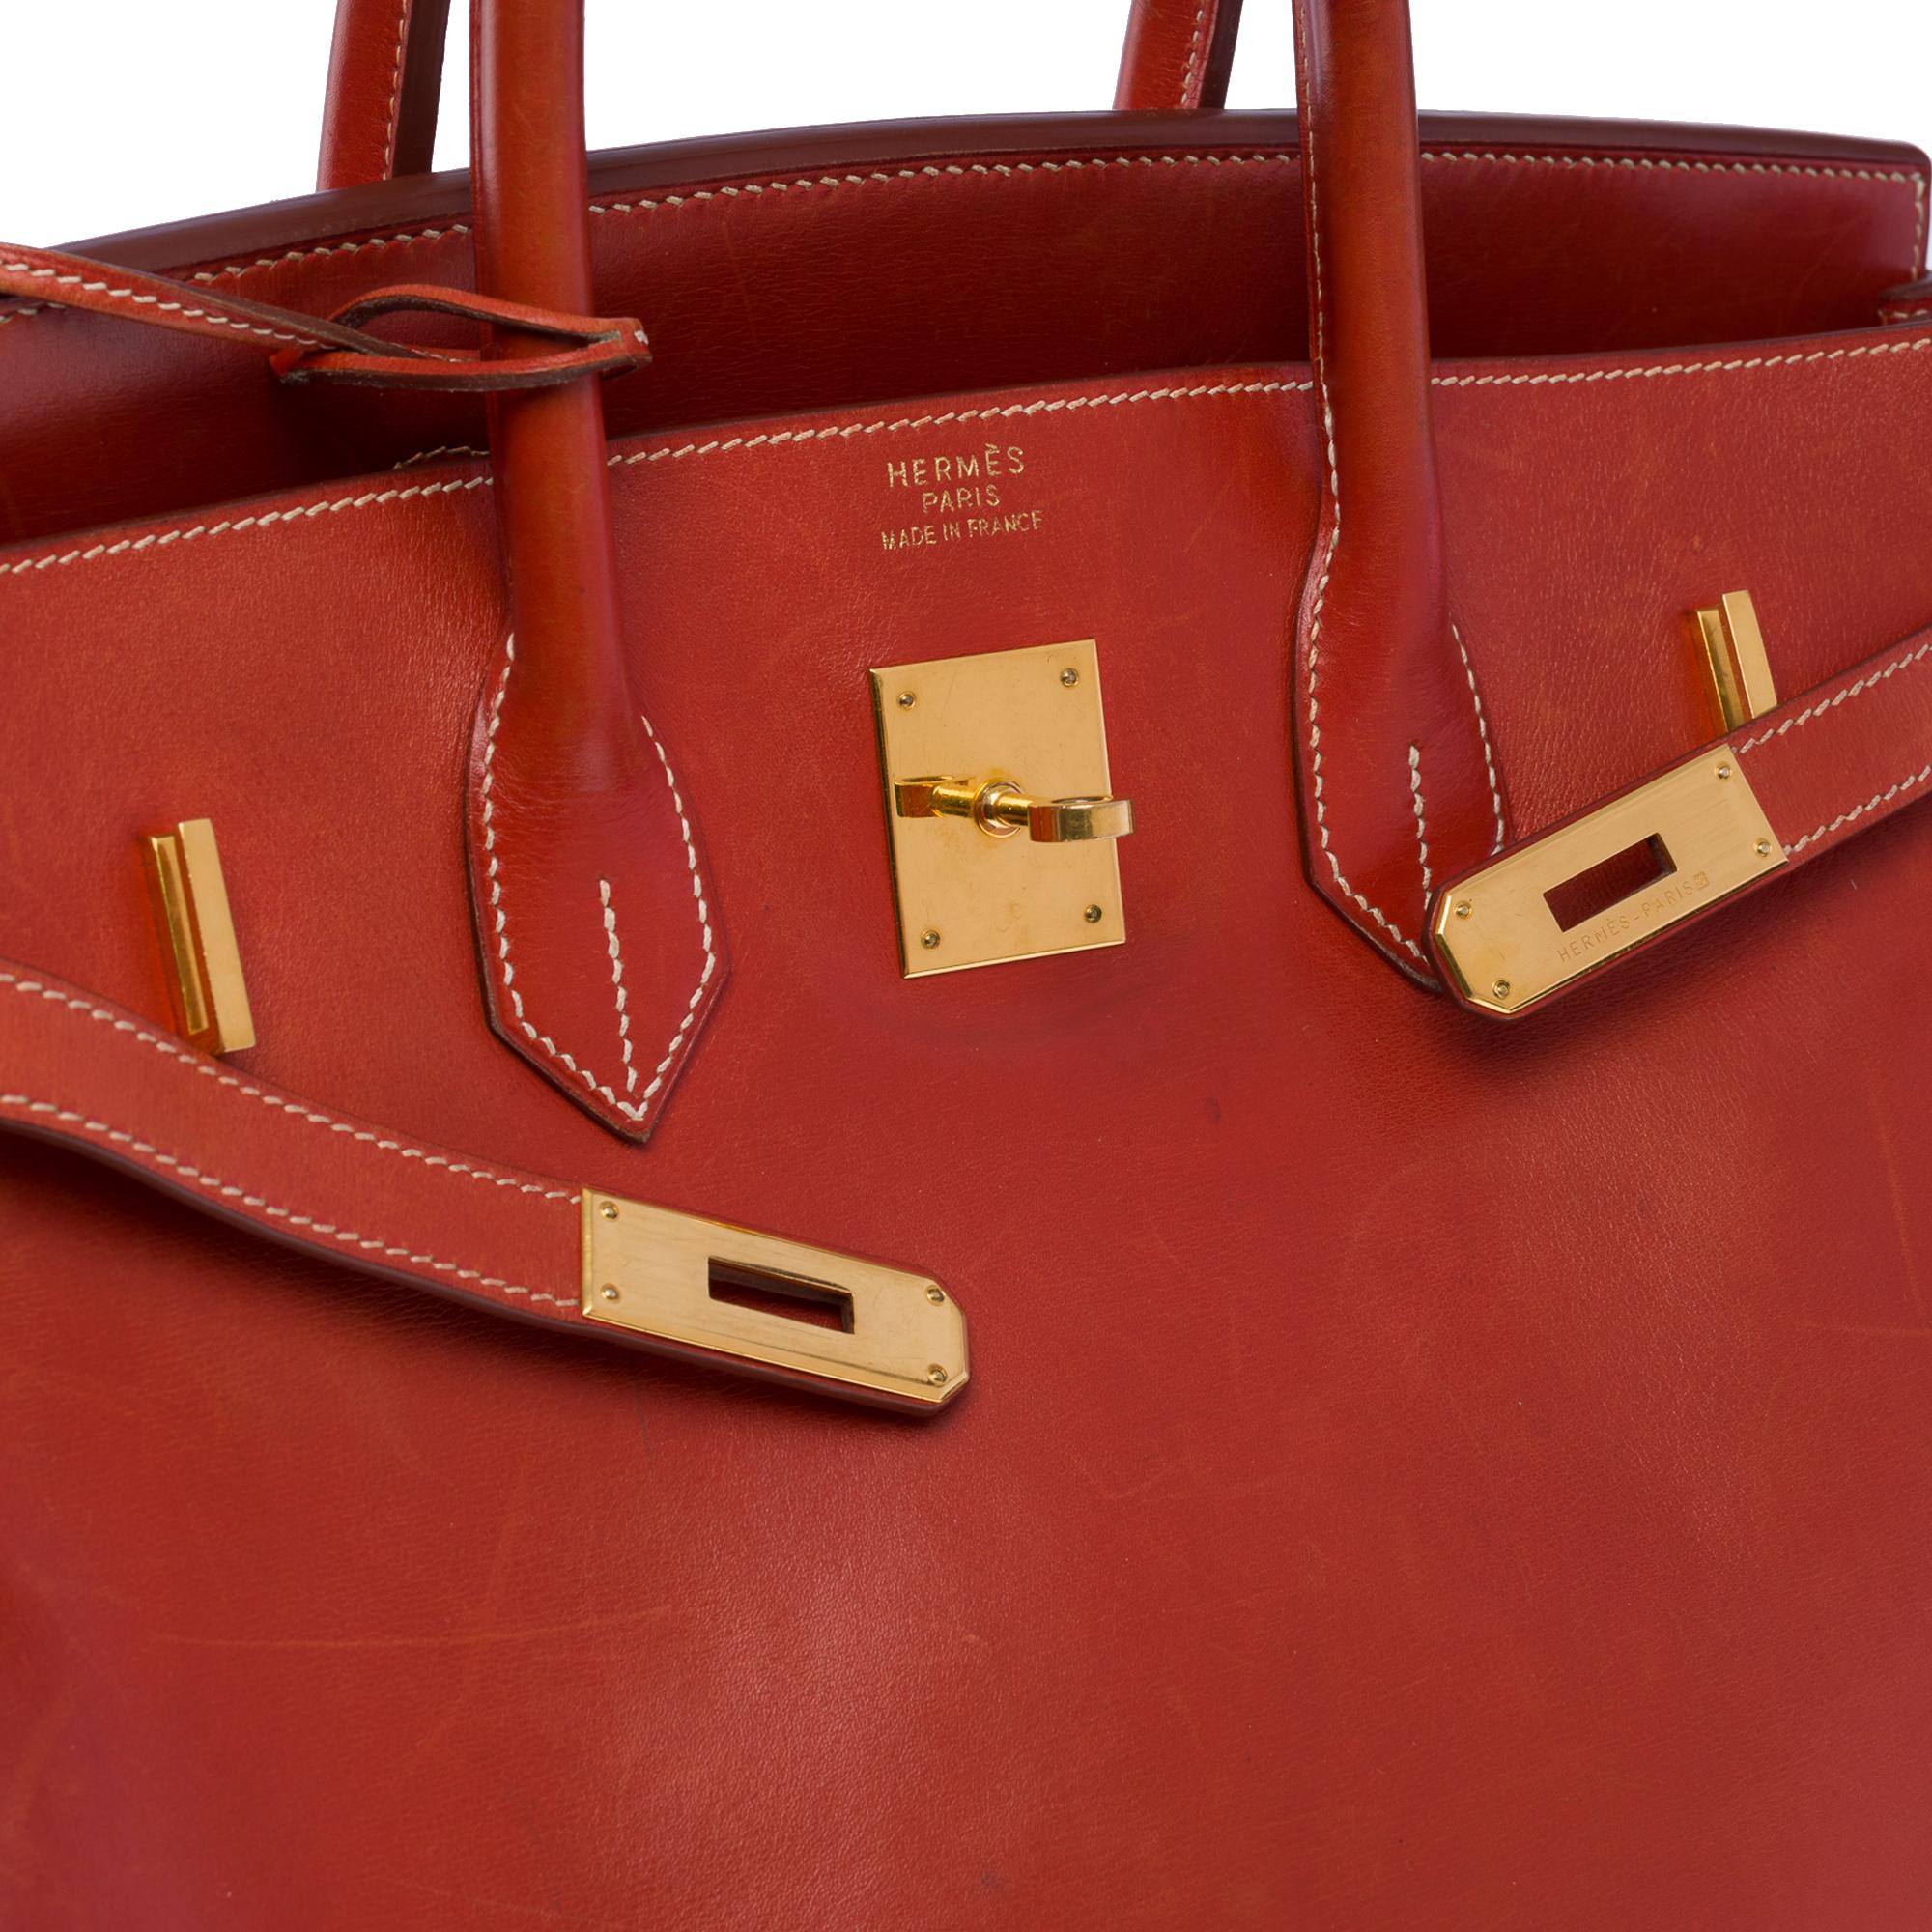 Amazing & Rare Hermès Birkin 35 handbag in Cognac box calfskin leather, GHW 1